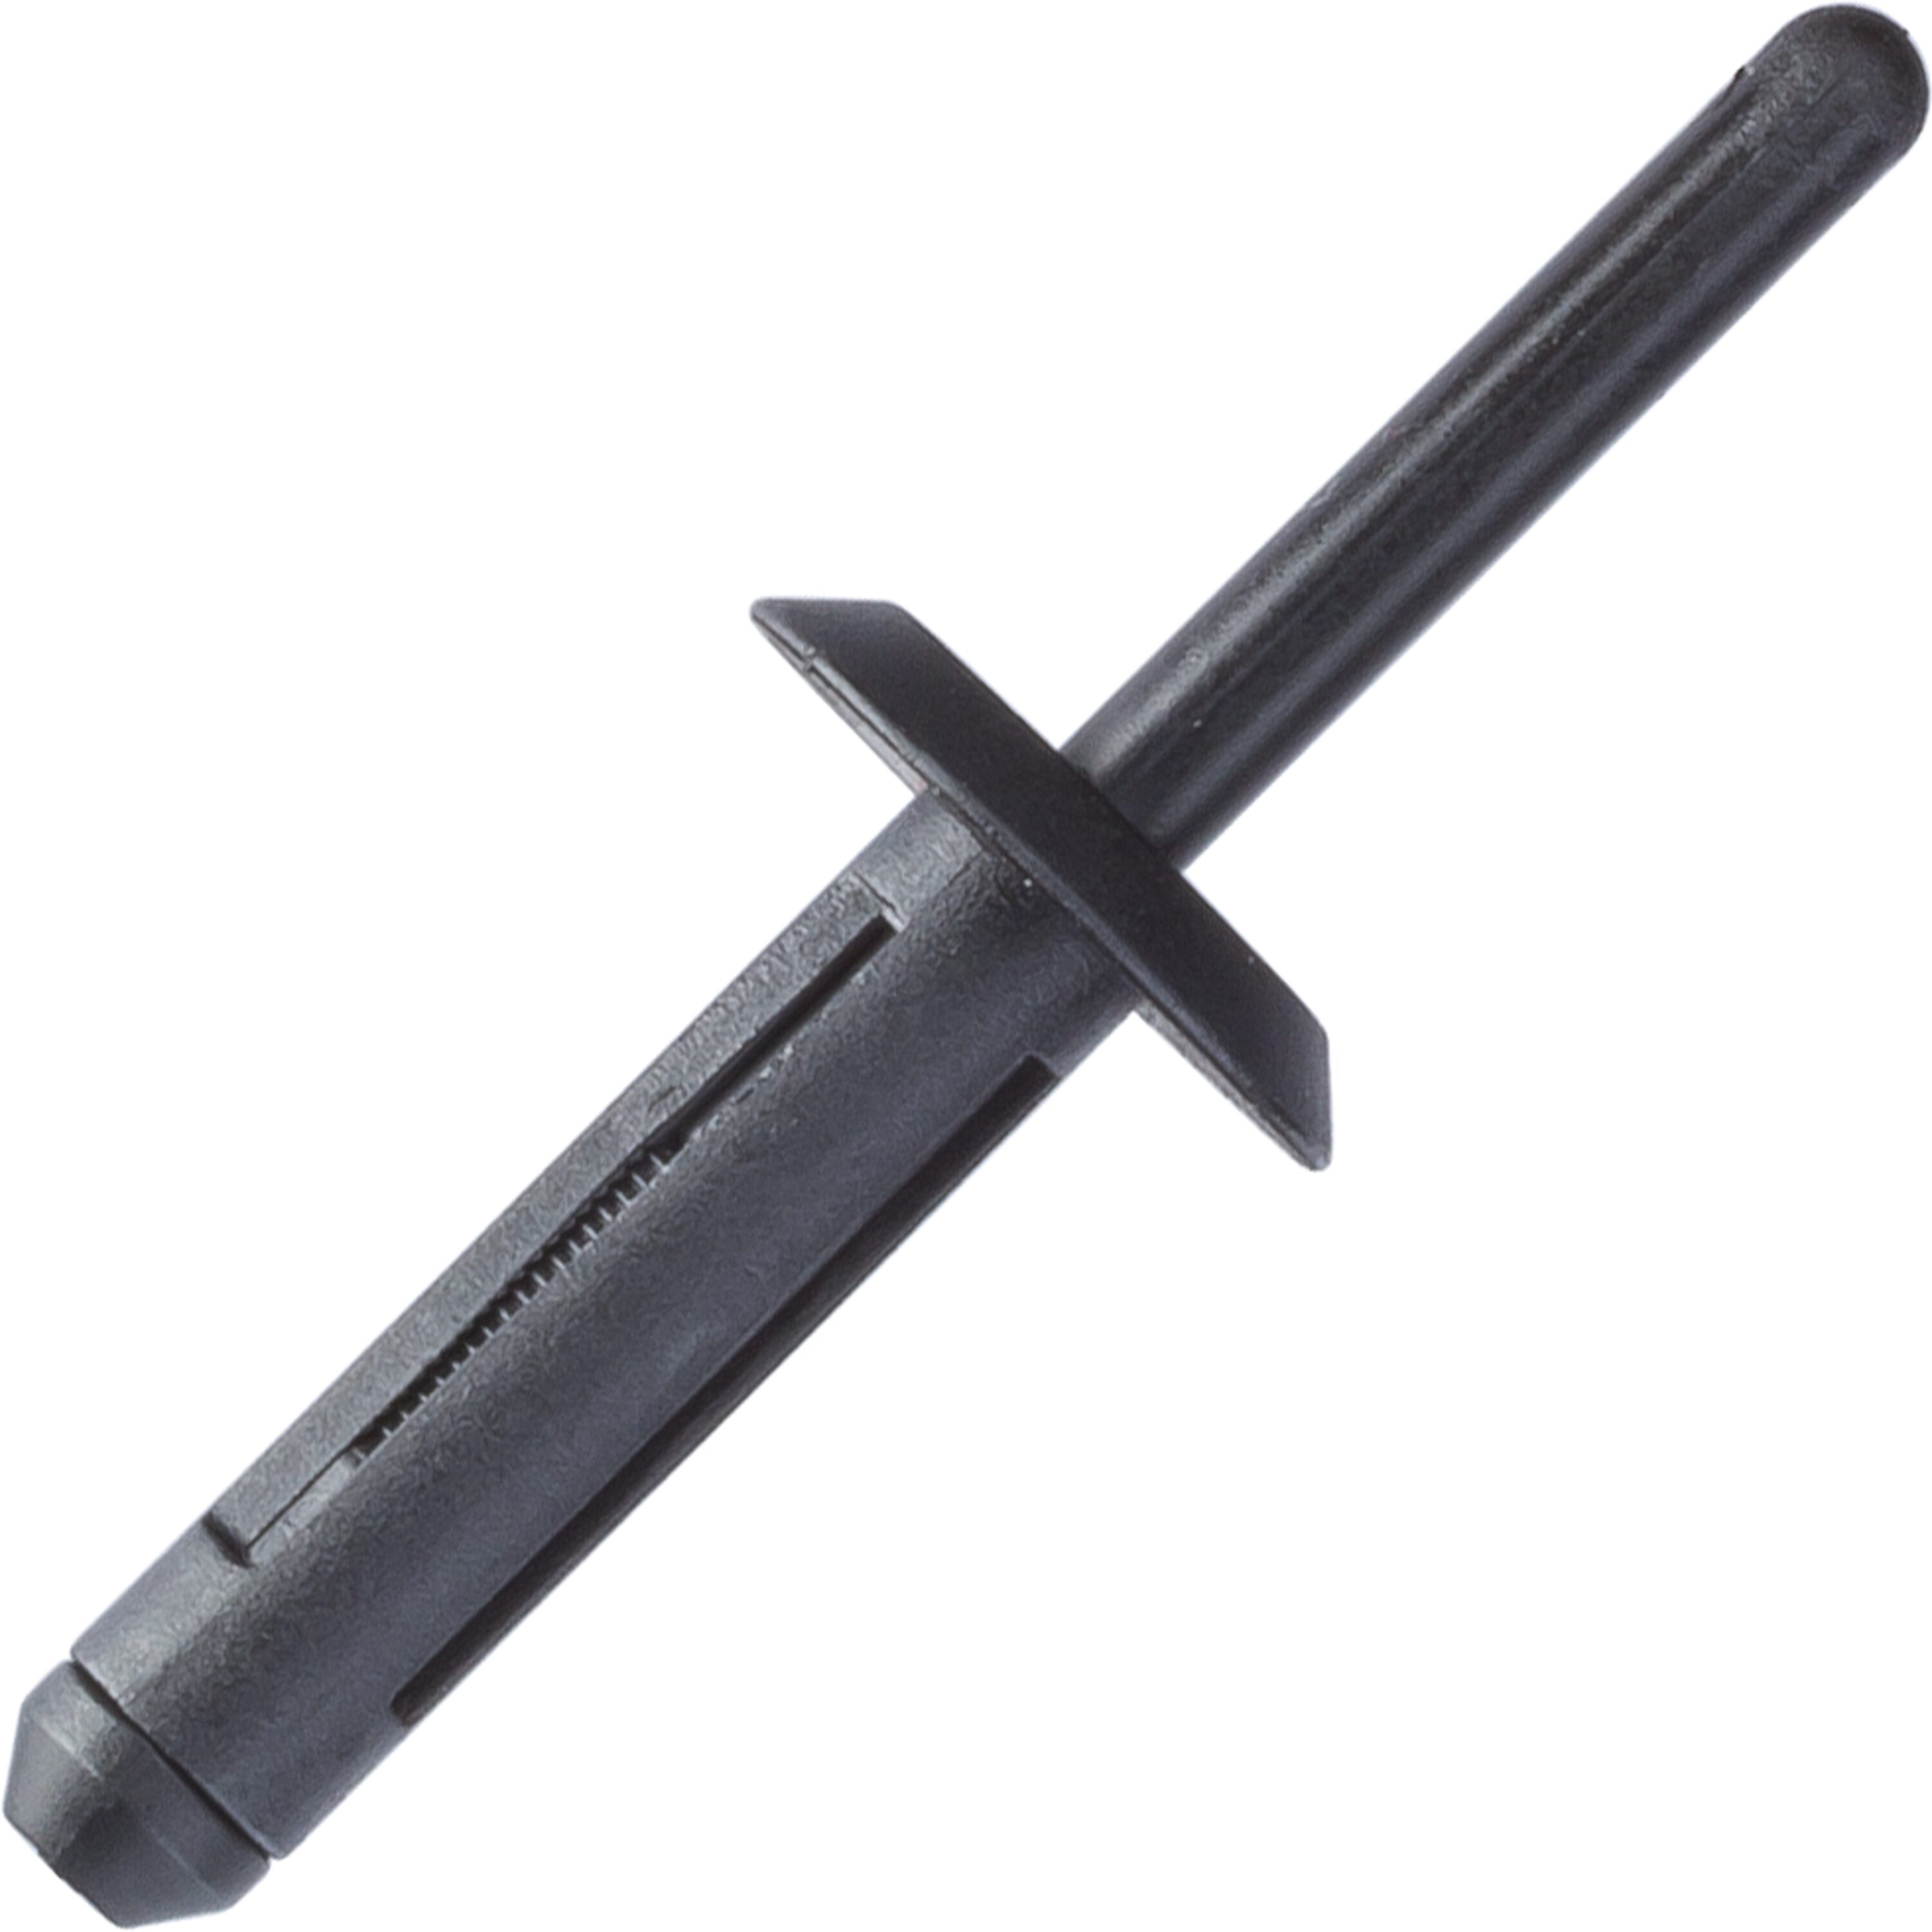 Pliers for plastic rivets, Nietzange, Pliers, Hand tools